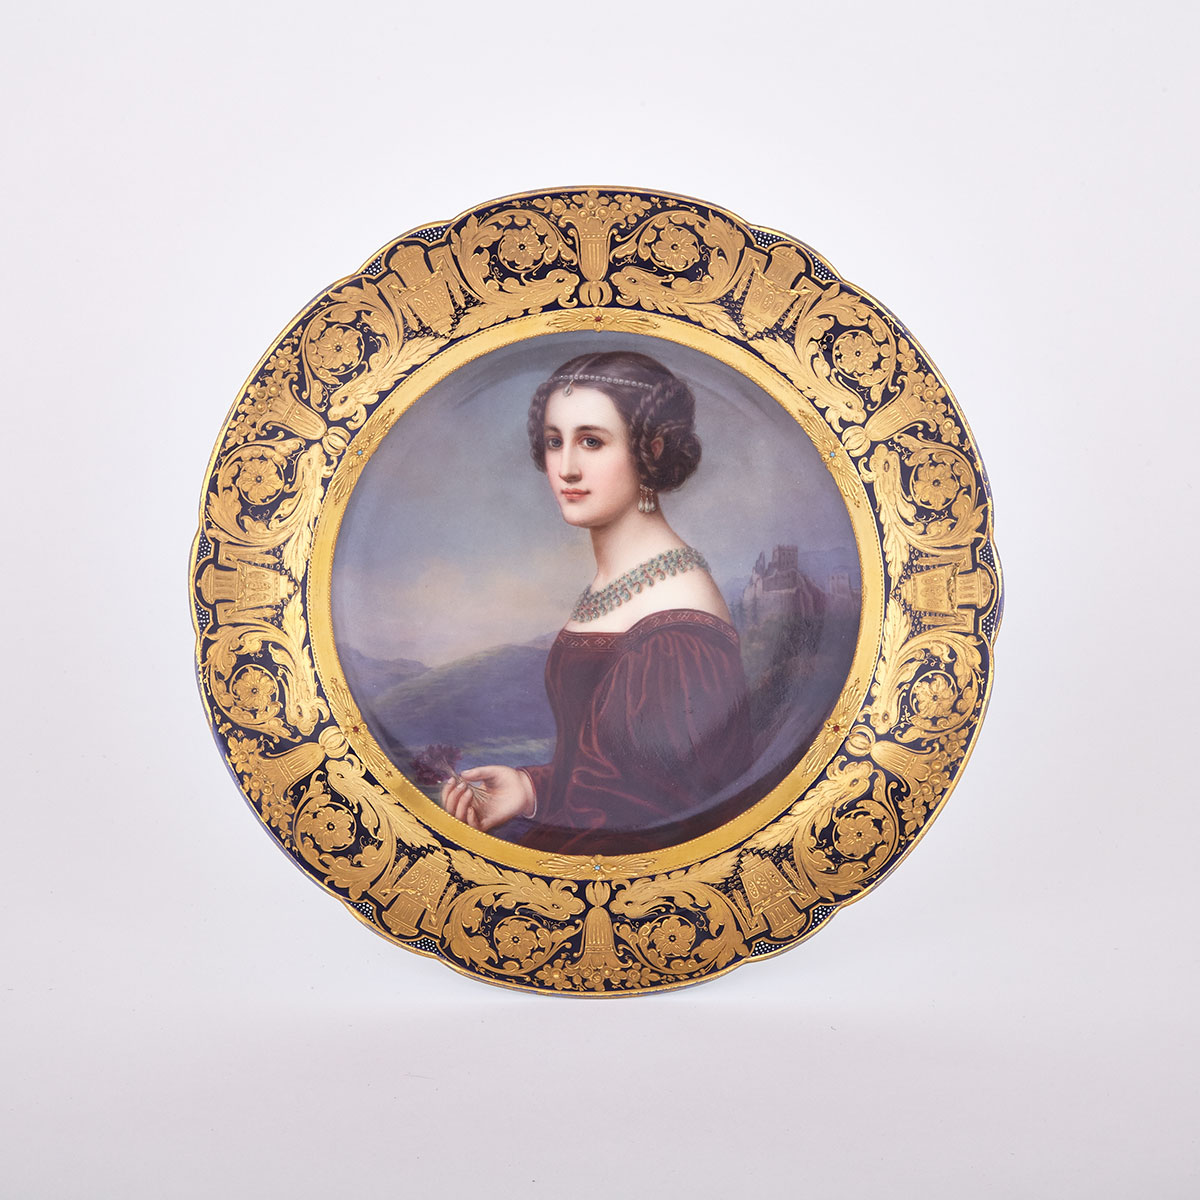 Hutschenreuther ‘Cornelia Vetterlein’ Portrait Plate, early 20th century